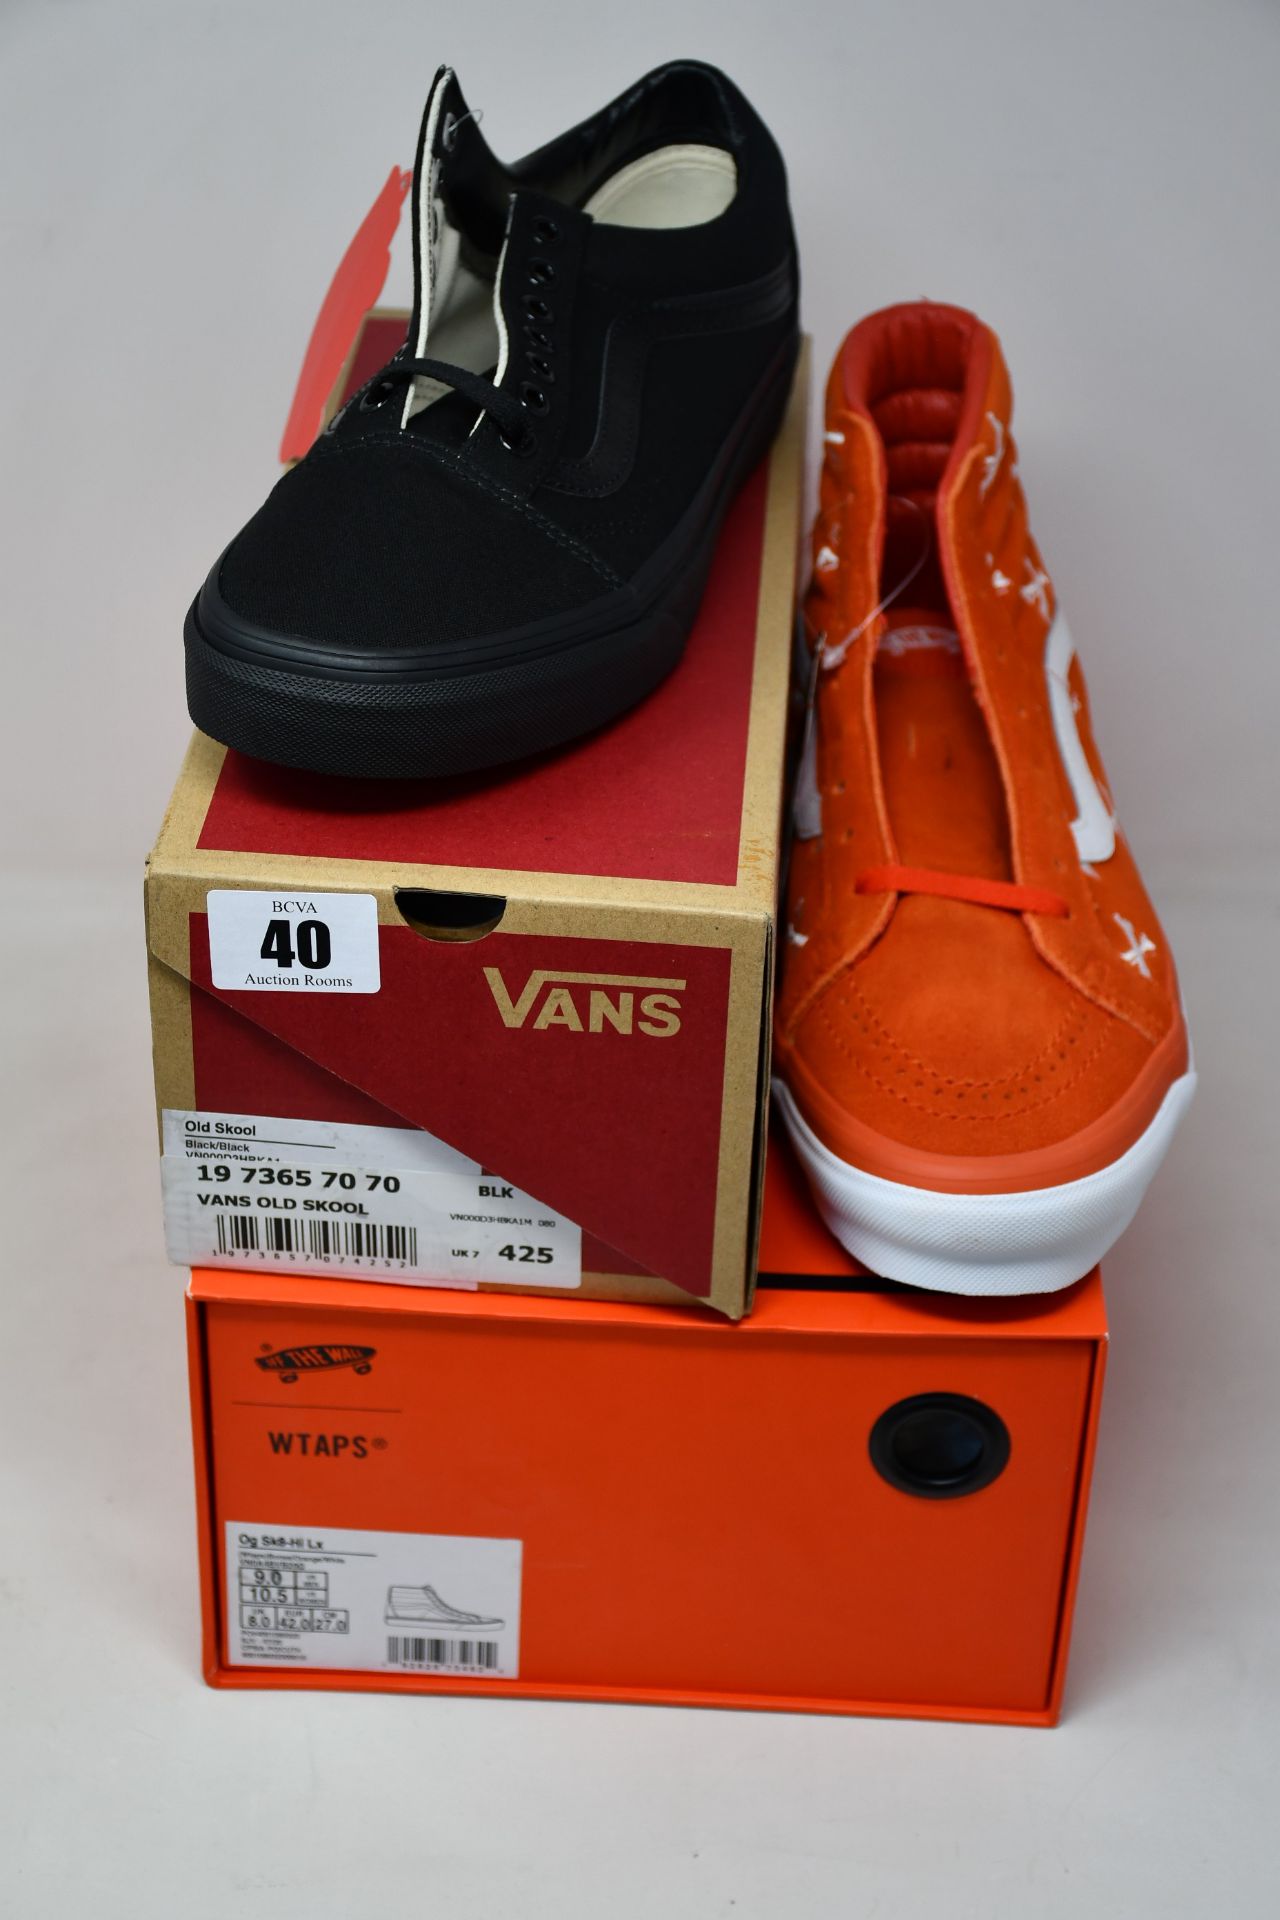 A pair of as new Vans WTAPS Og Sk8-Hi Lx sneakers (UK 8) together with a pair of Vans Old Skool (